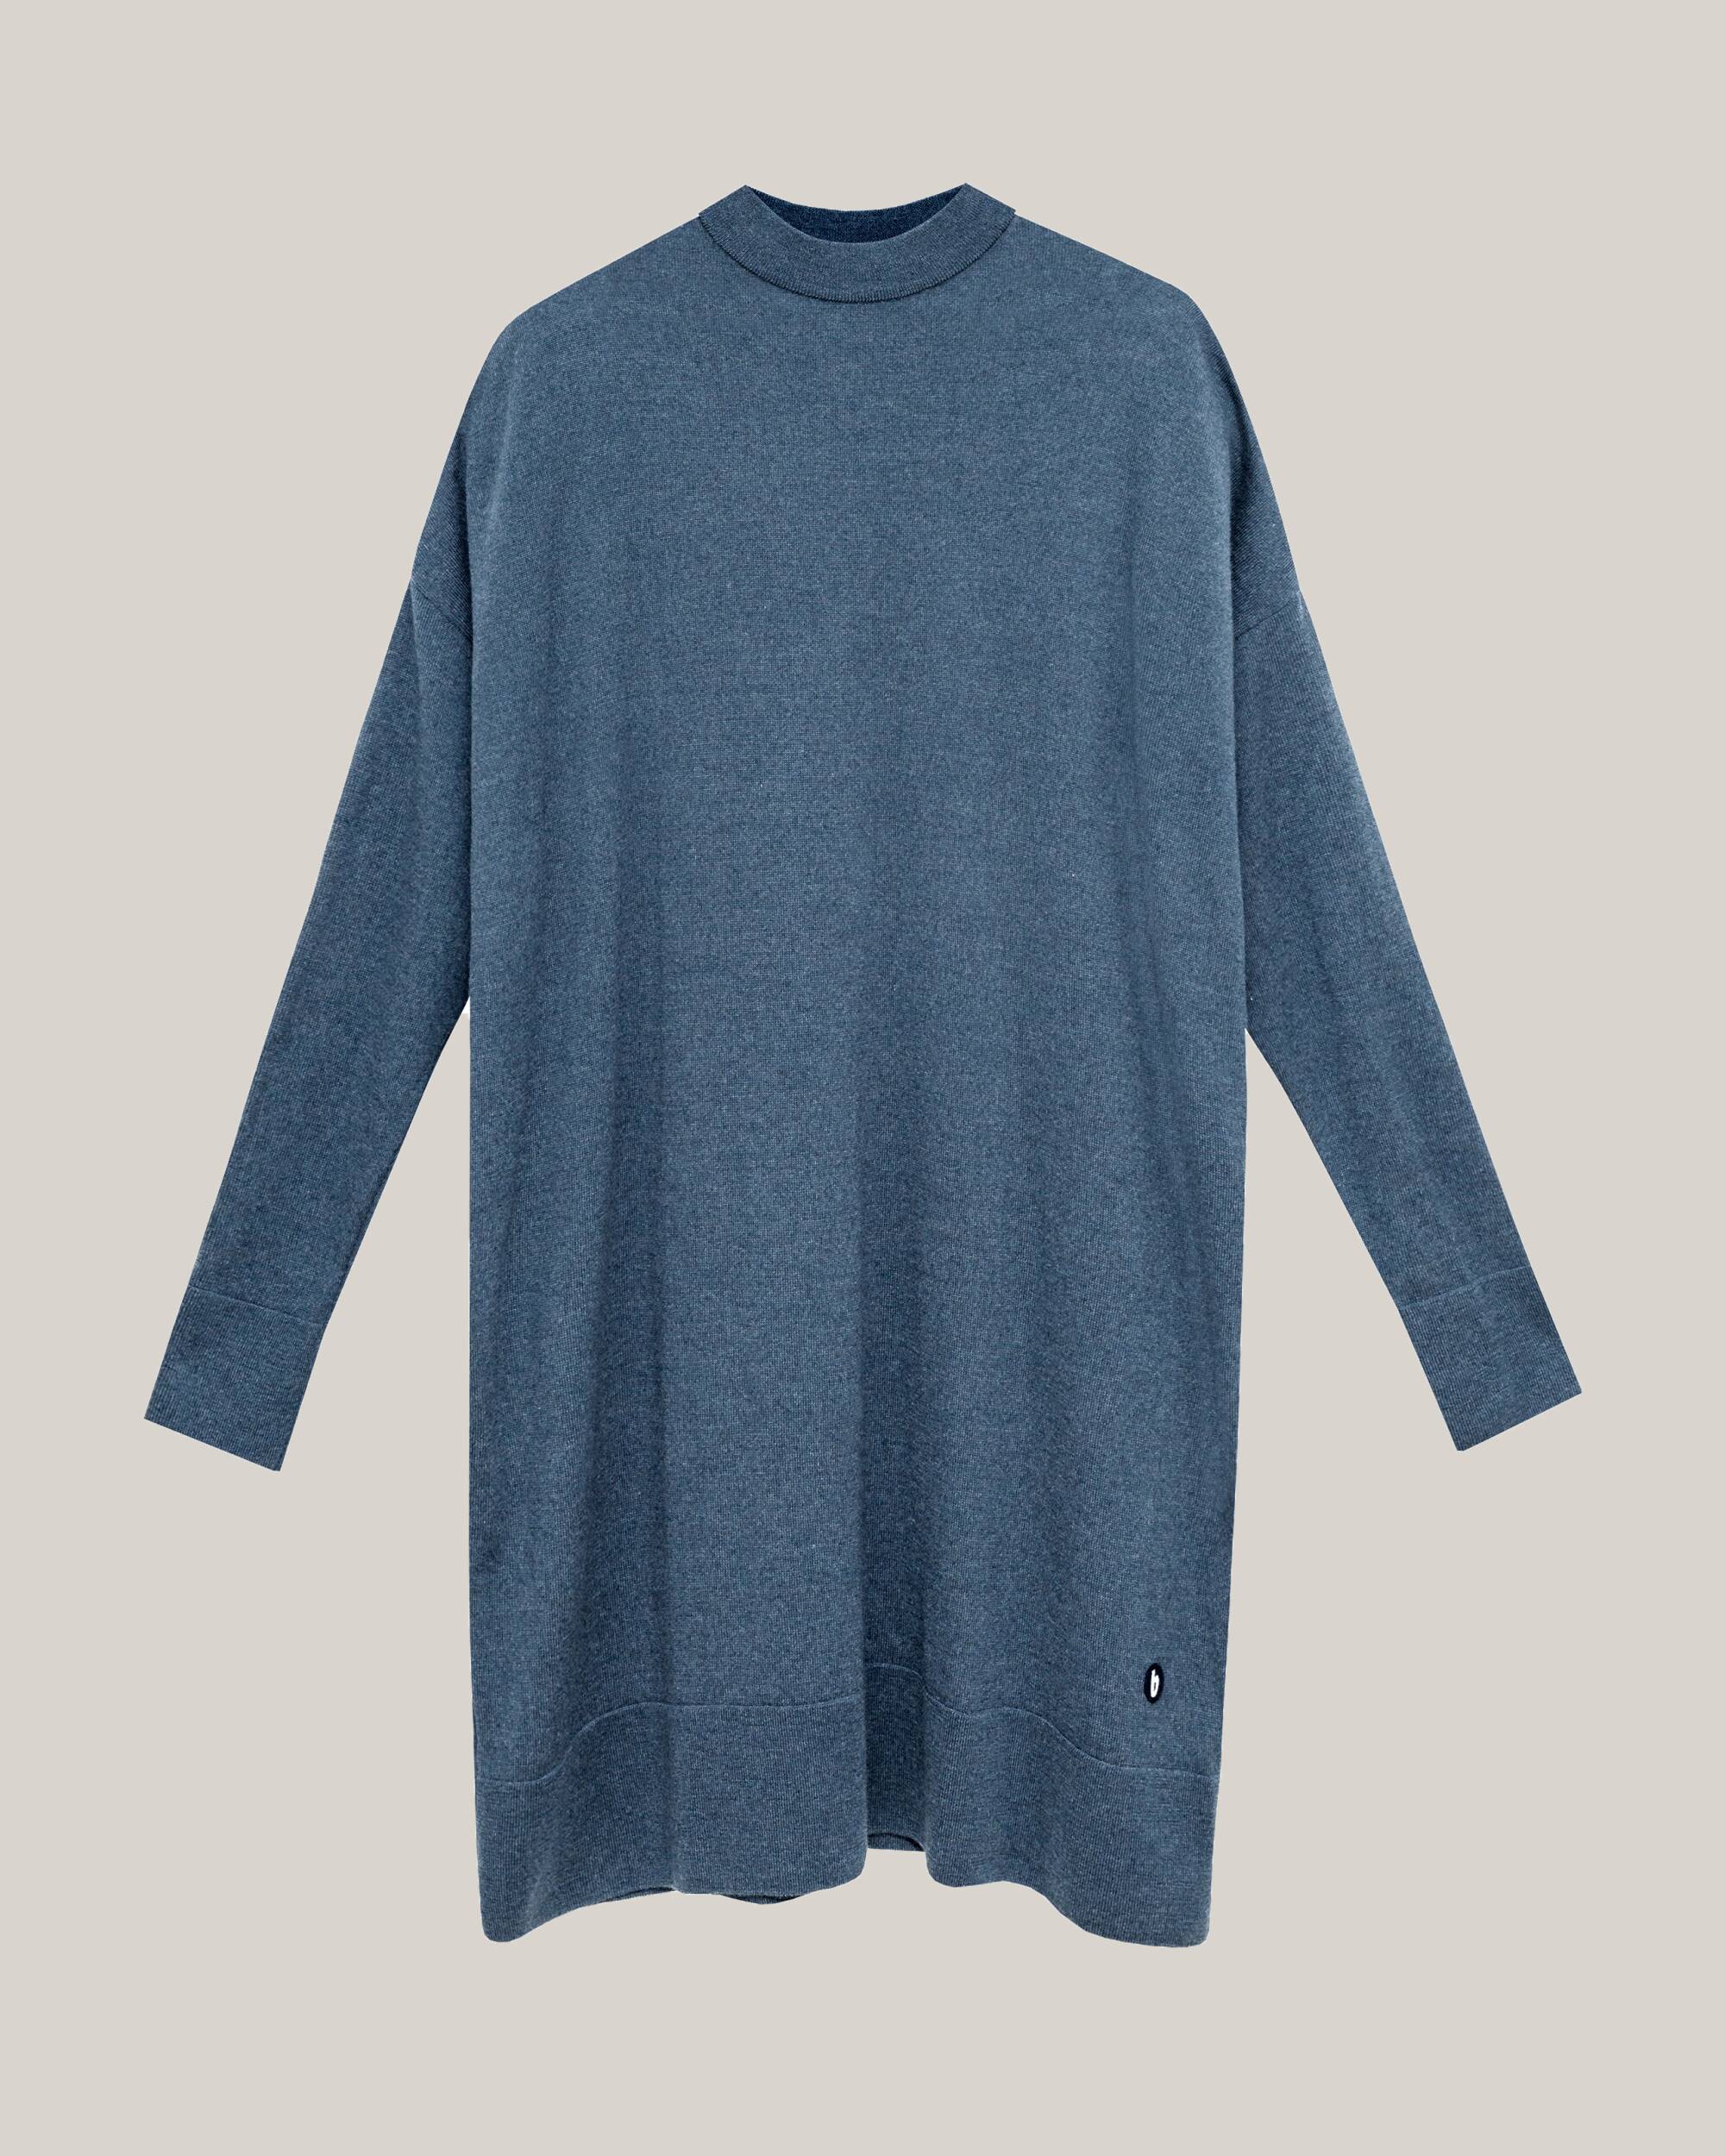 Pull "Winter Day" bleu en laine mérinos 100% biologique de Brava Fabrics